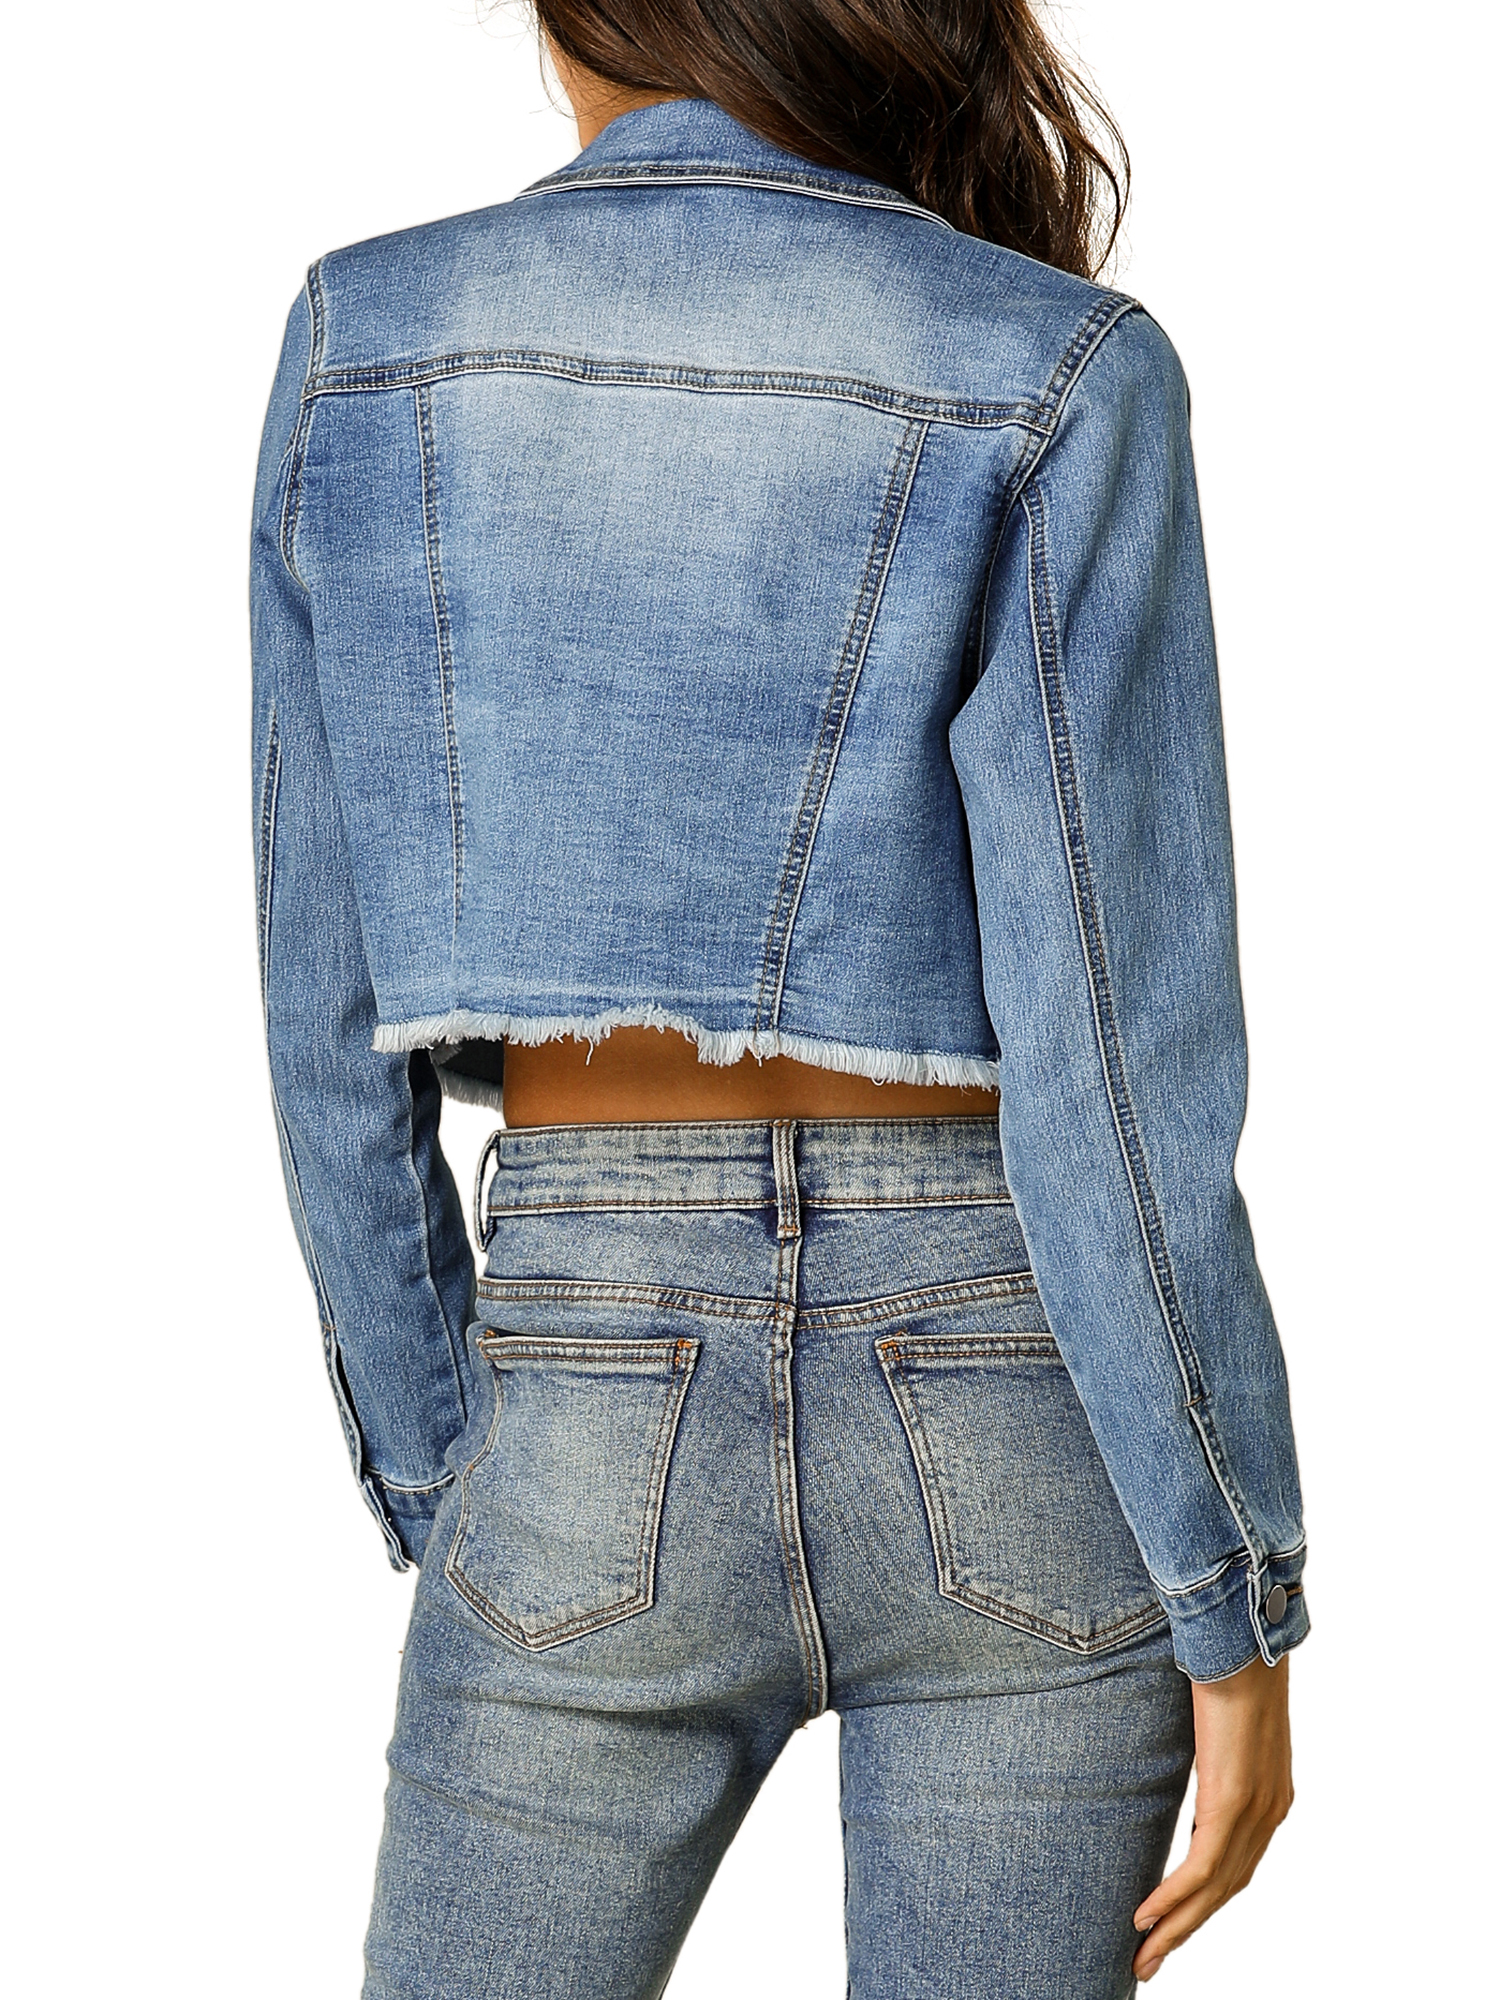 Unique Bargains Women's Jean Jacket Frayed Button Up Washed Cropped Denim Jackets XS Light Blue - image 3 of 7